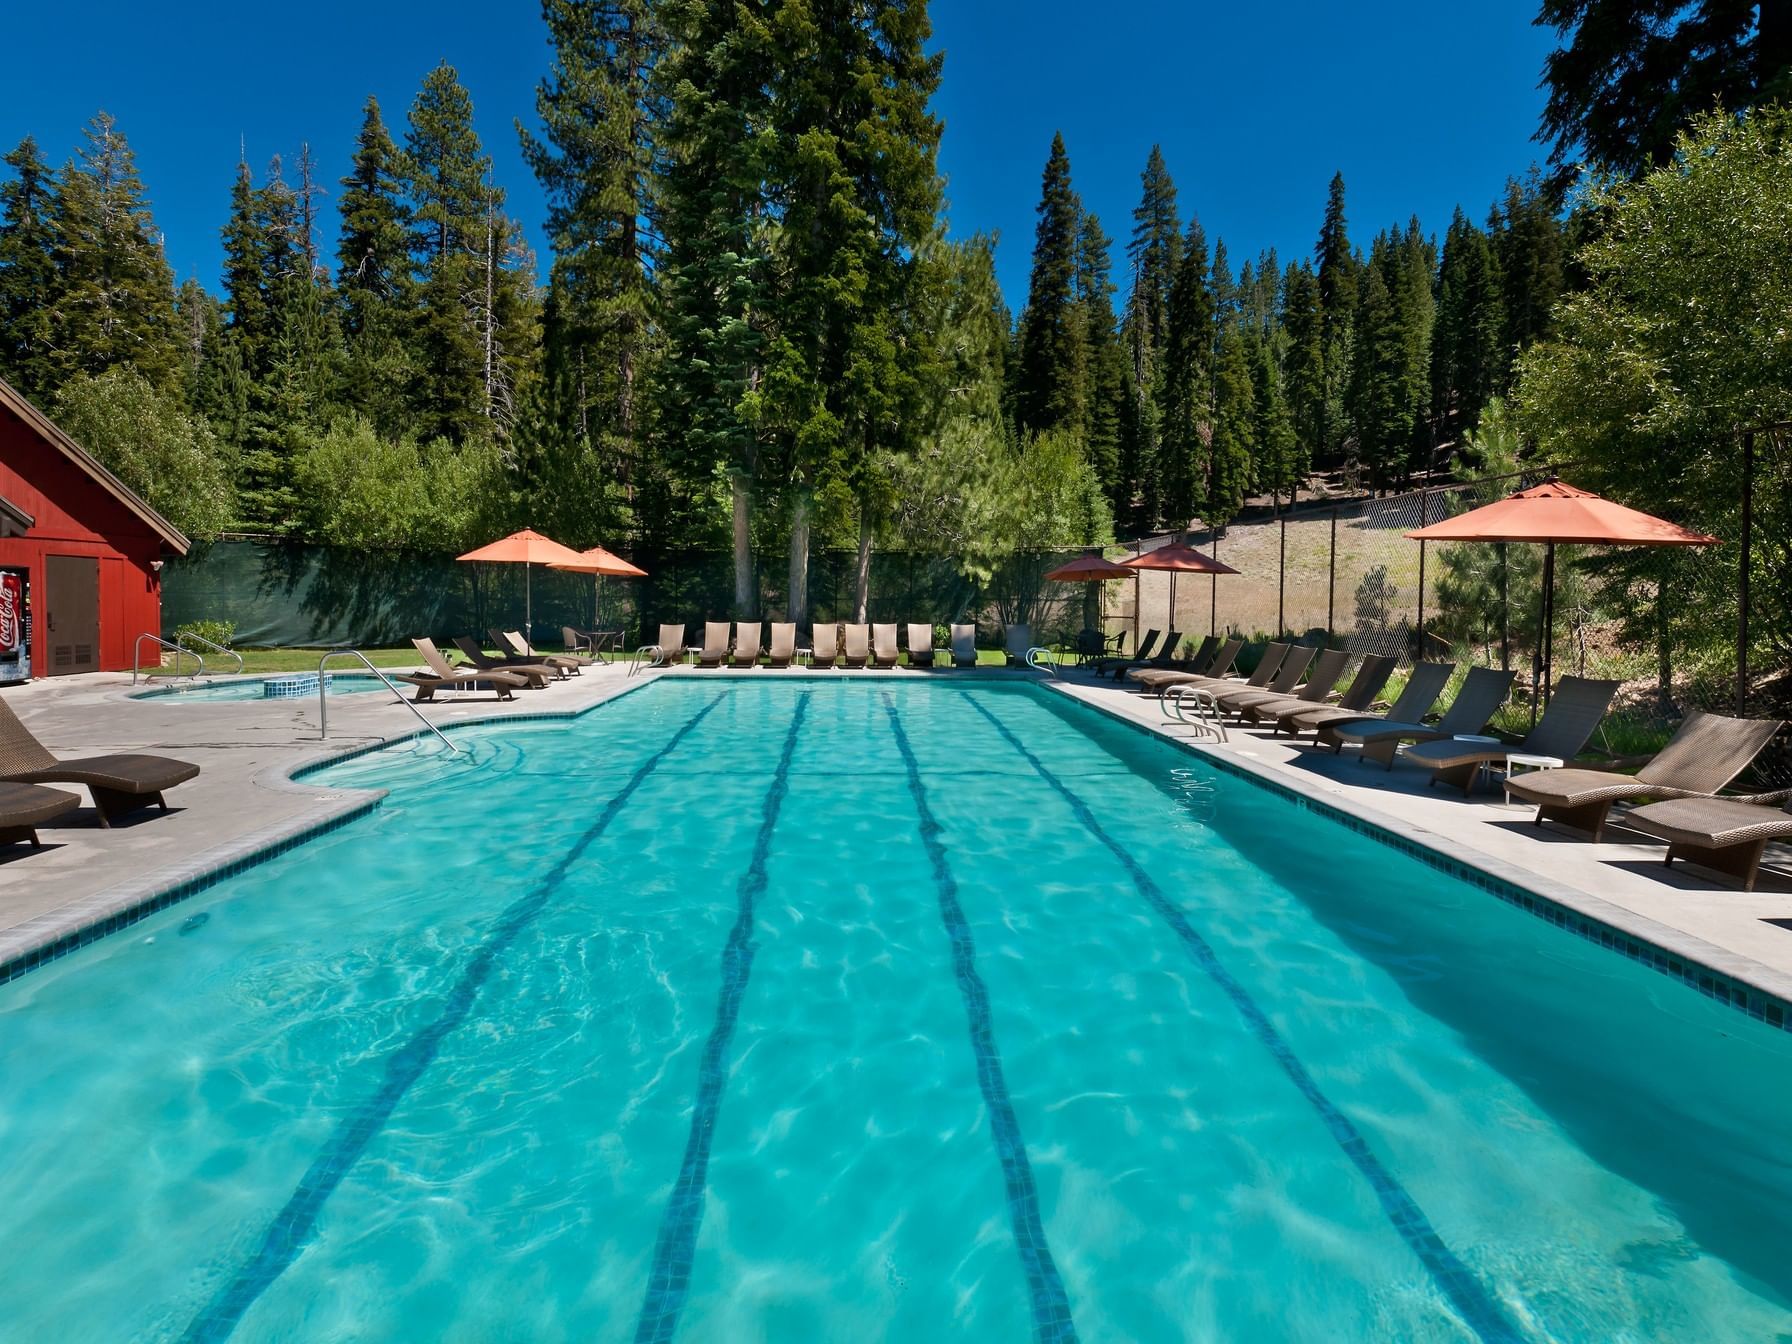 Sunbeds by the outdoor pool area at Granlibakken Tahoe